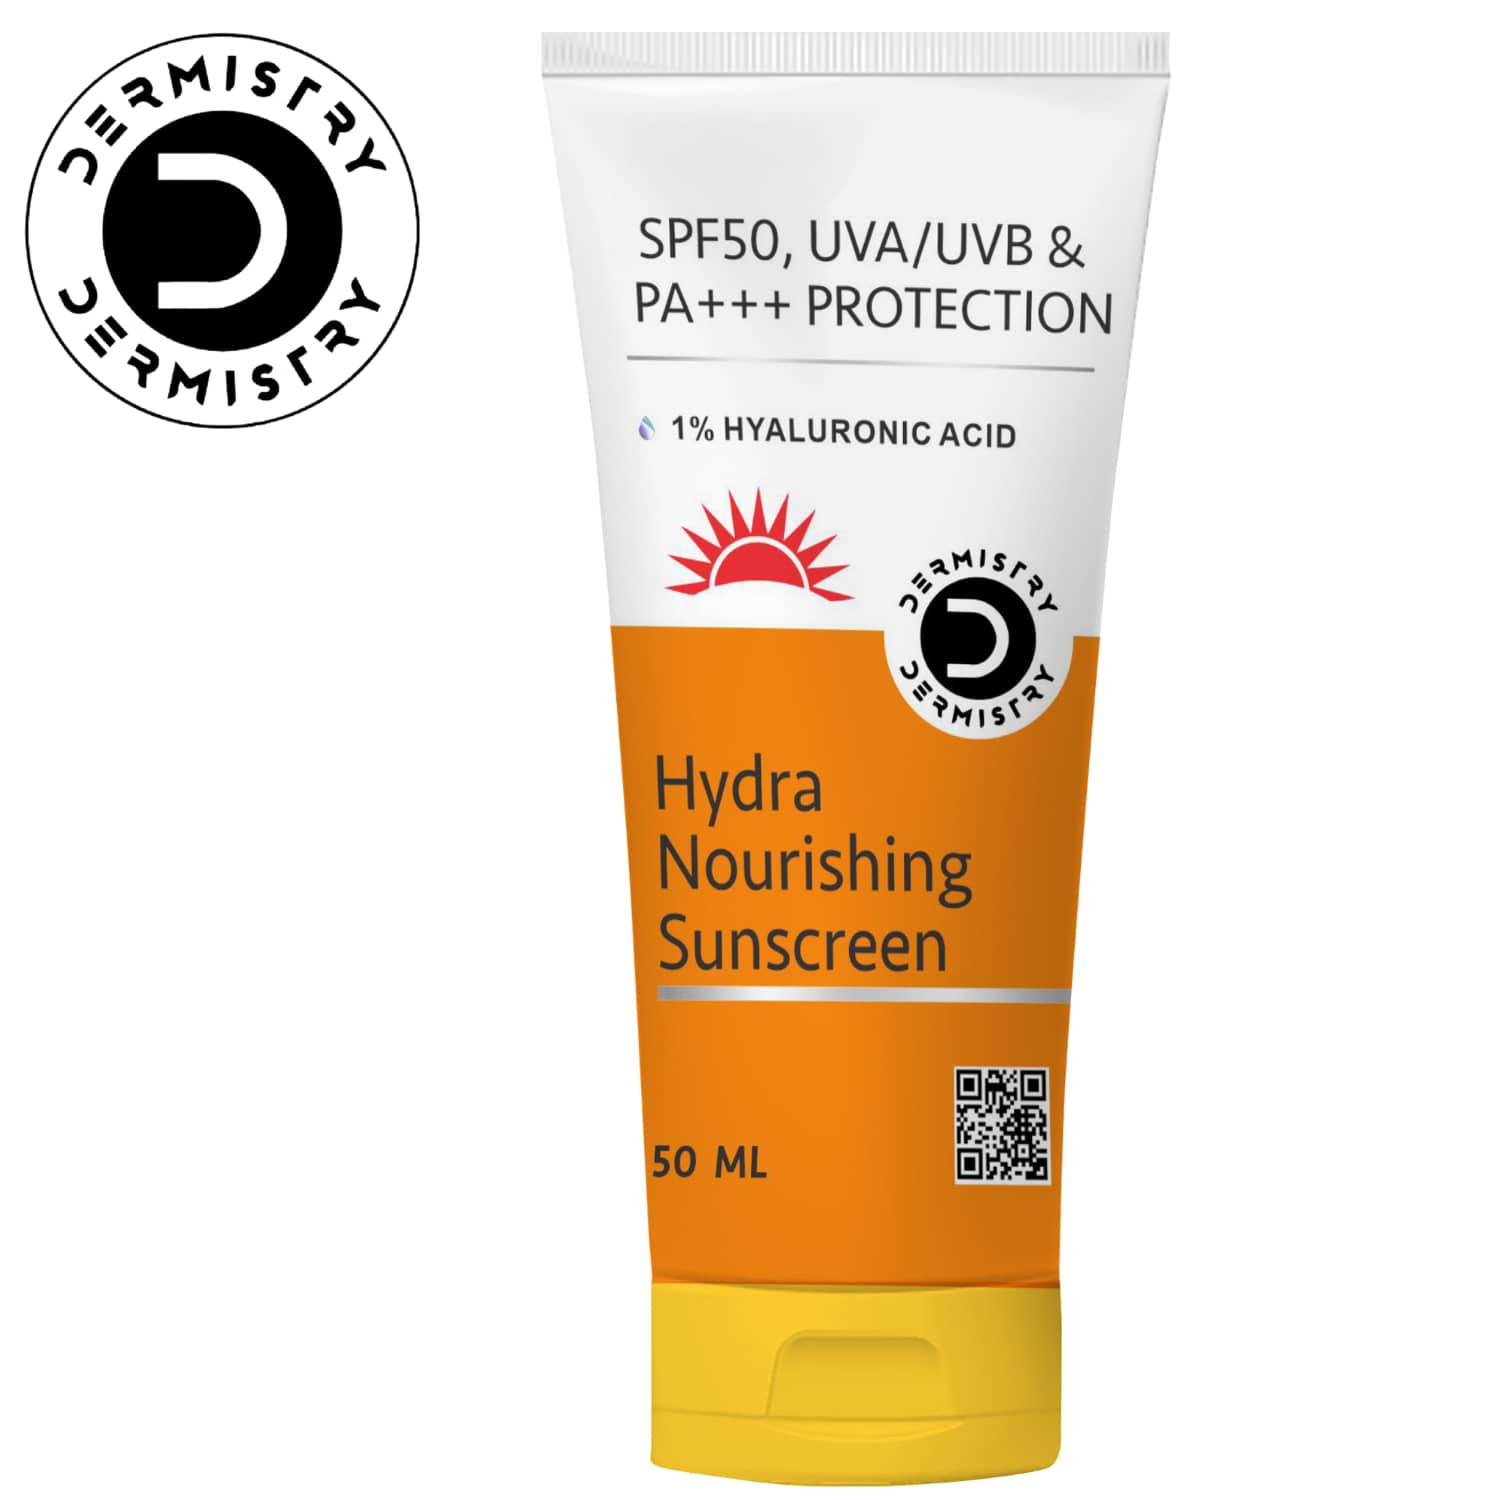 Dermistry 1% Hyaluronic Acid Ultra Hydrating Sunscreen for Dry Skin SPF 50 UVA UVB PA+++  Protection-50ml